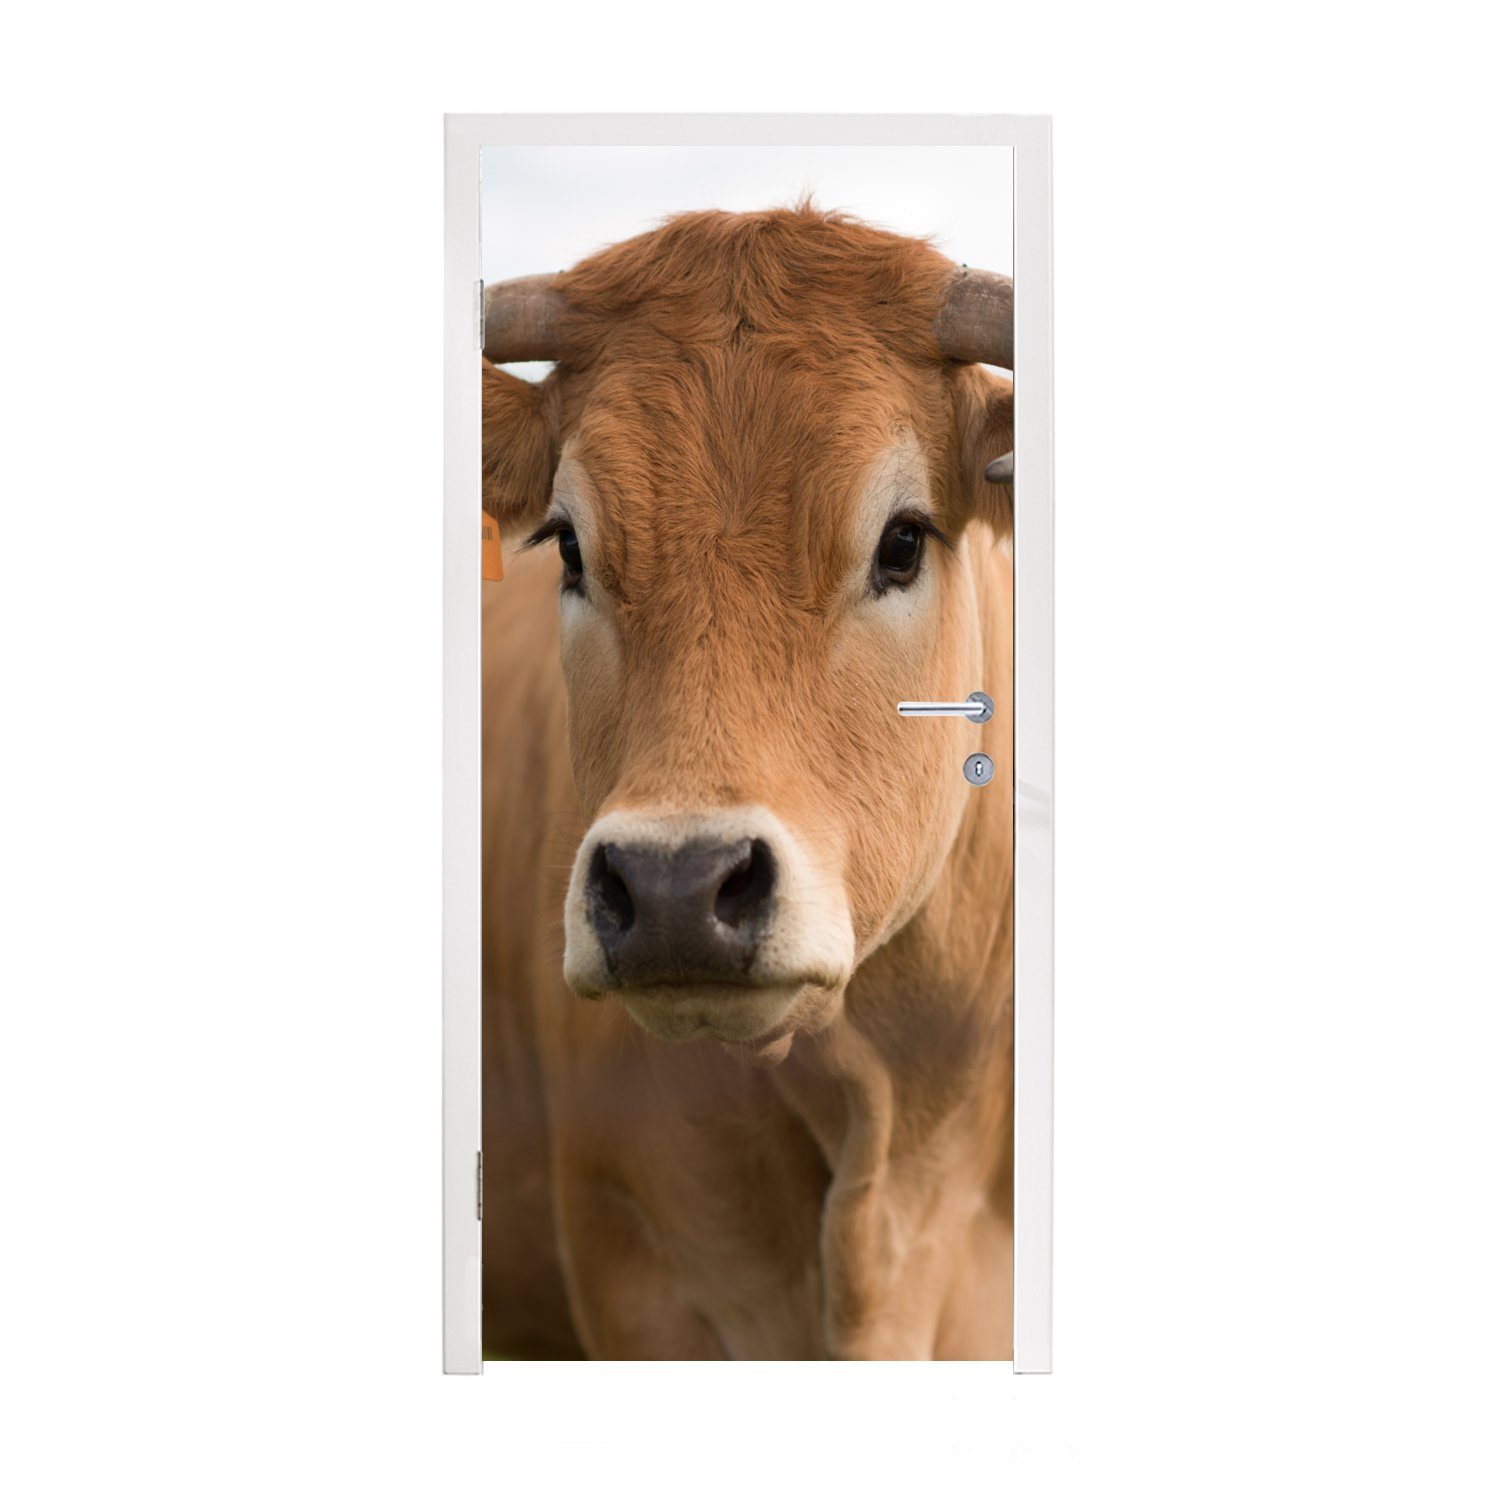 MuchoWow Türtapete Kuh - Horn - Porträt, Matt, bedruckt, (1 St), Fototapete für Tür, Türaufkleber, 75x205 cm | Türtapeten